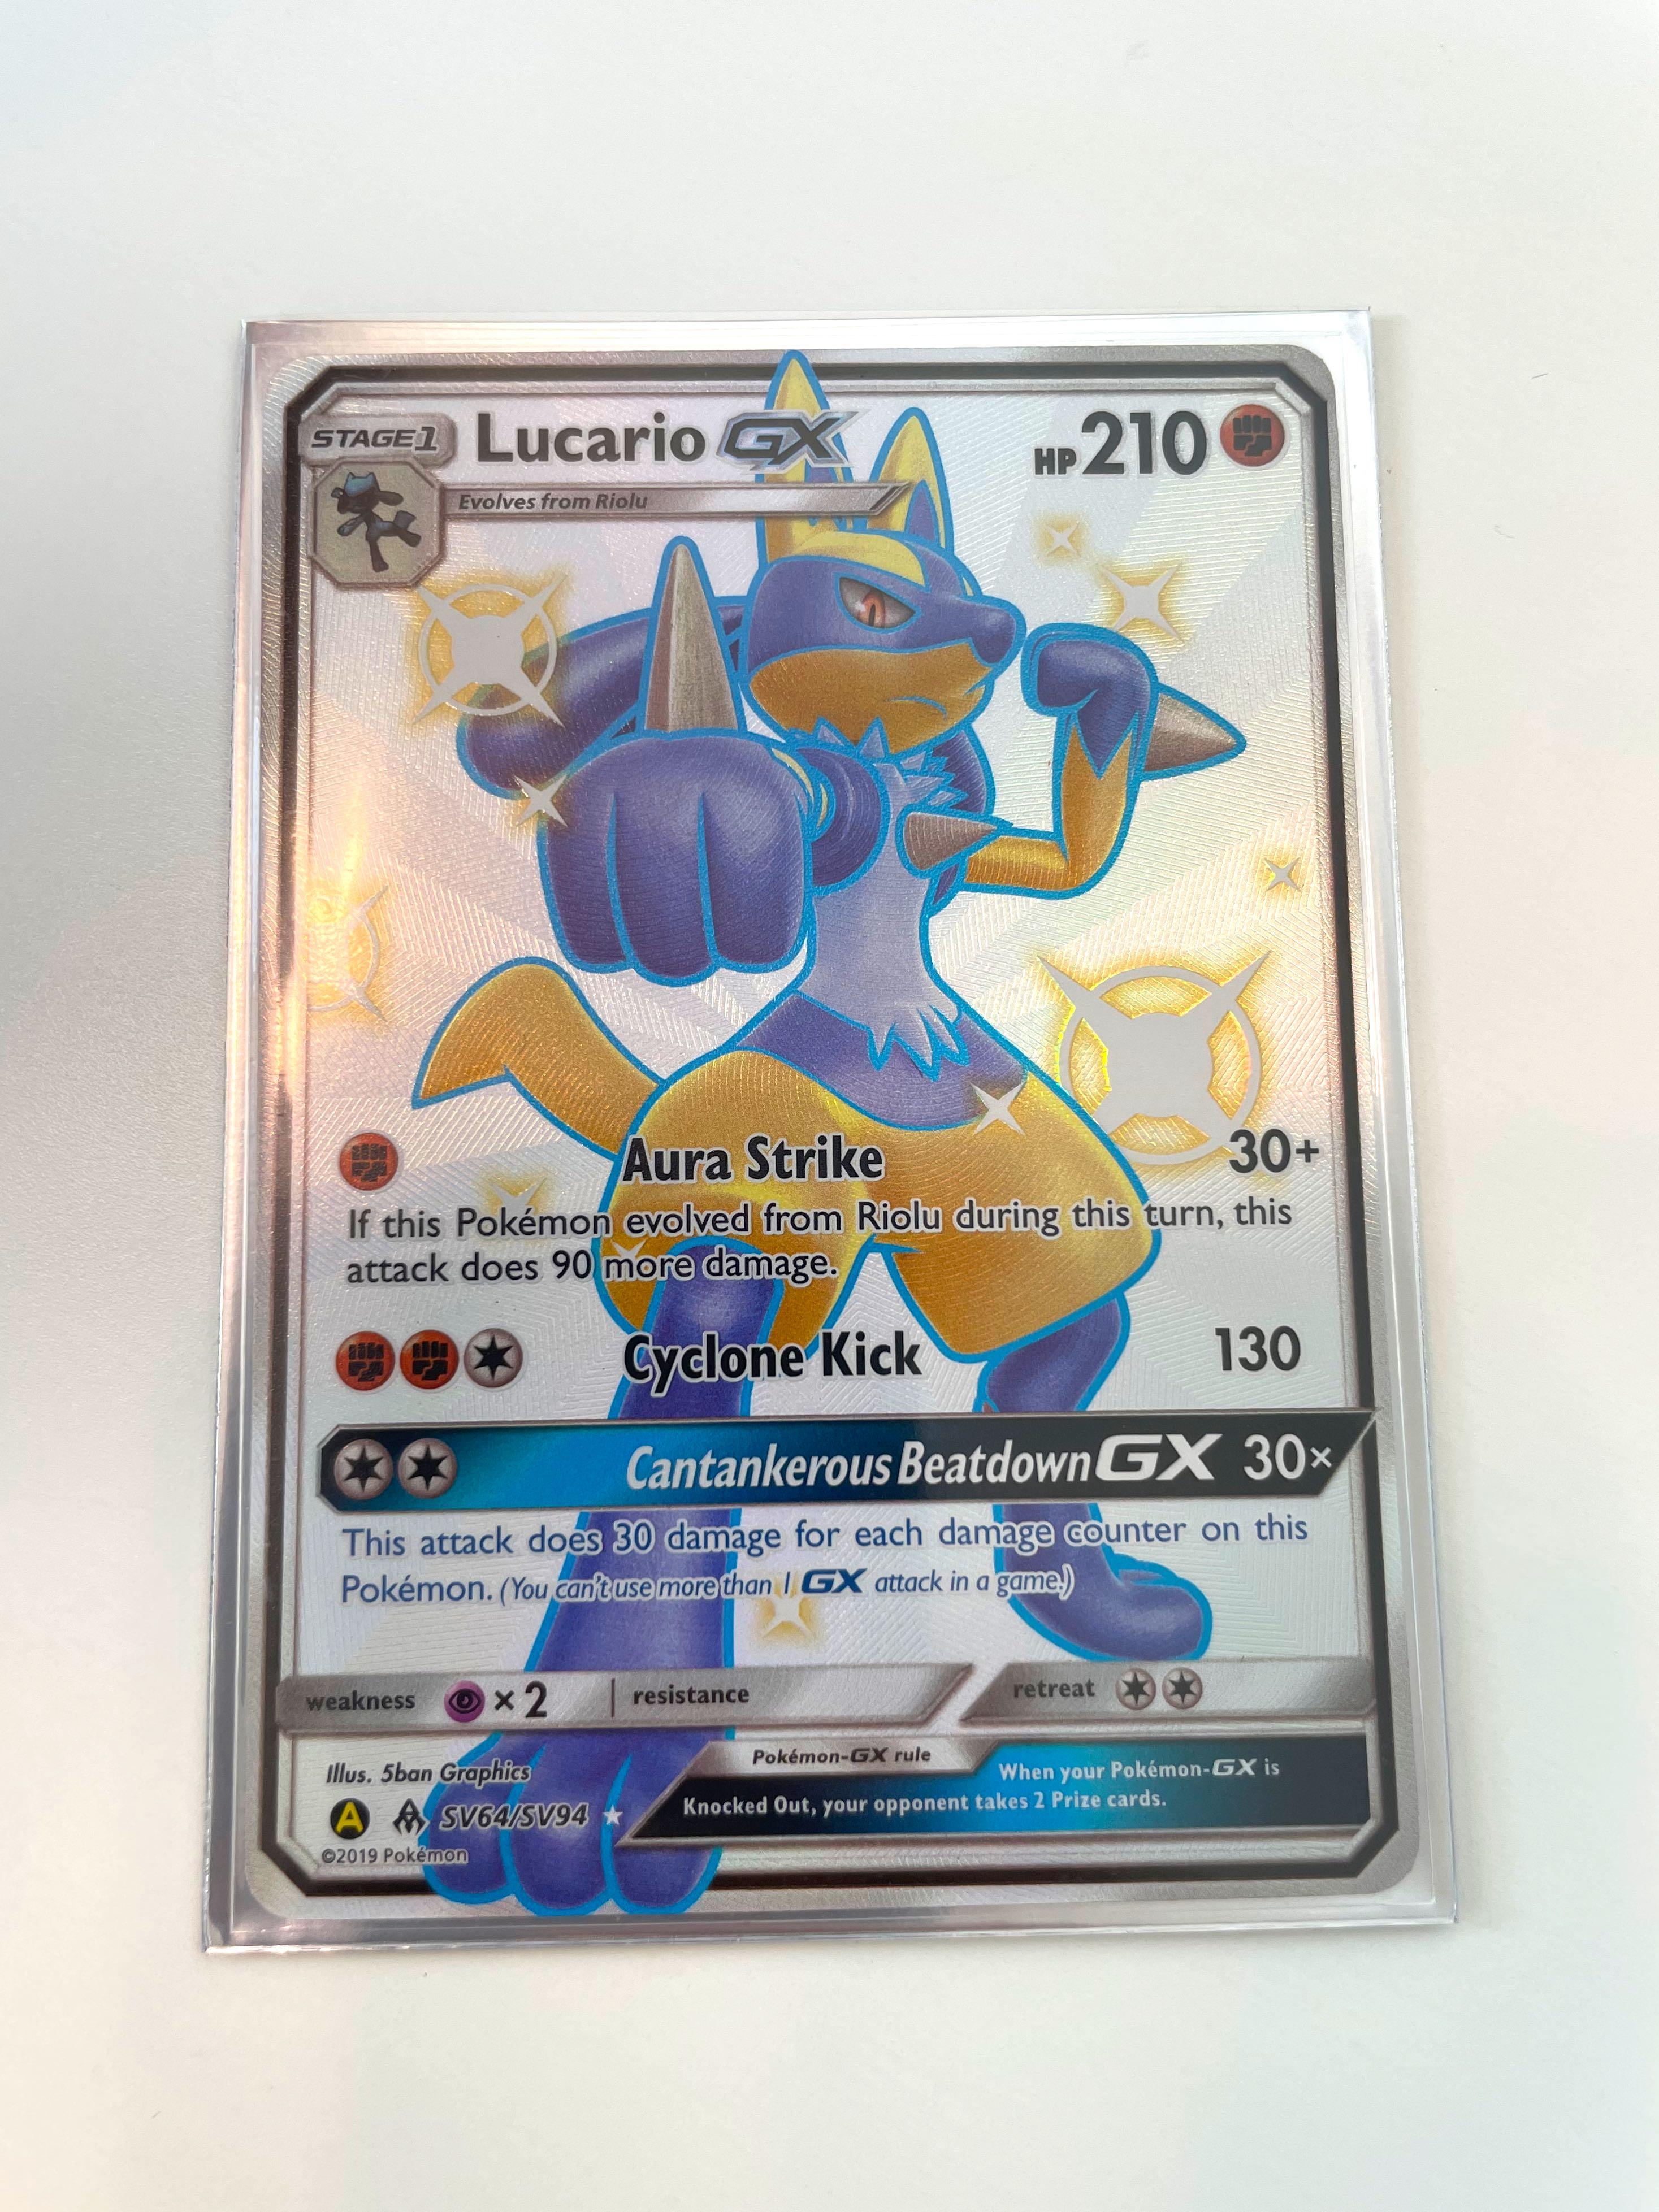 The Pokémon Company - Pokémon - Graded Card Lucario Holo PSA10 Hidden Fates  Baby Shiny - 2019 - Catawiki